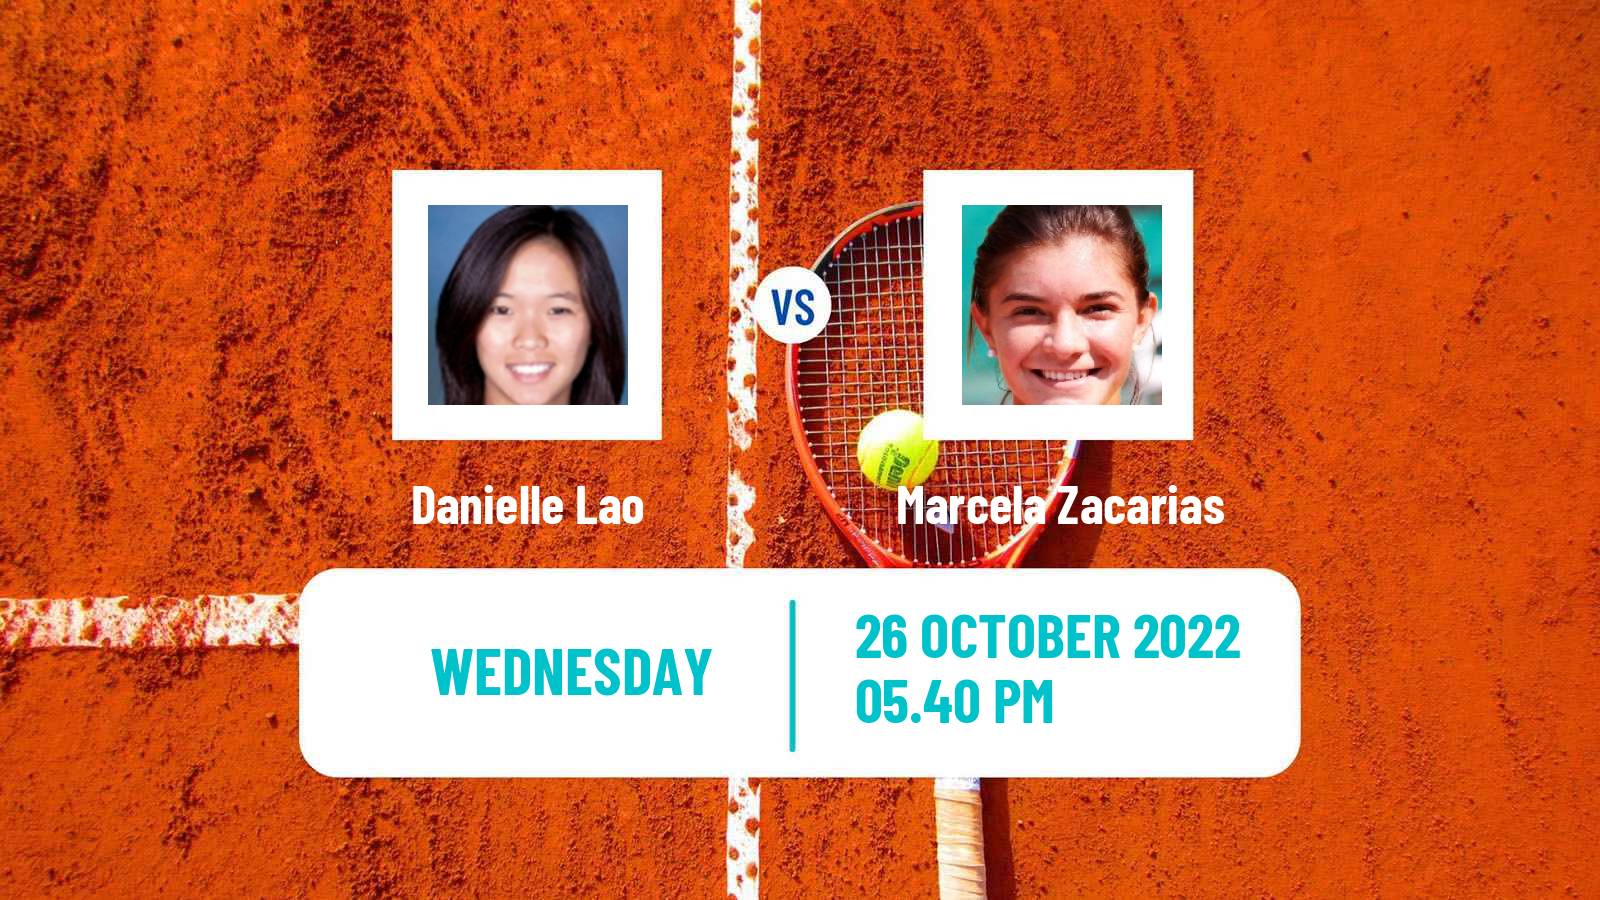 Tennis ITF Tournaments Danielle Lao - Marcela Zacarias